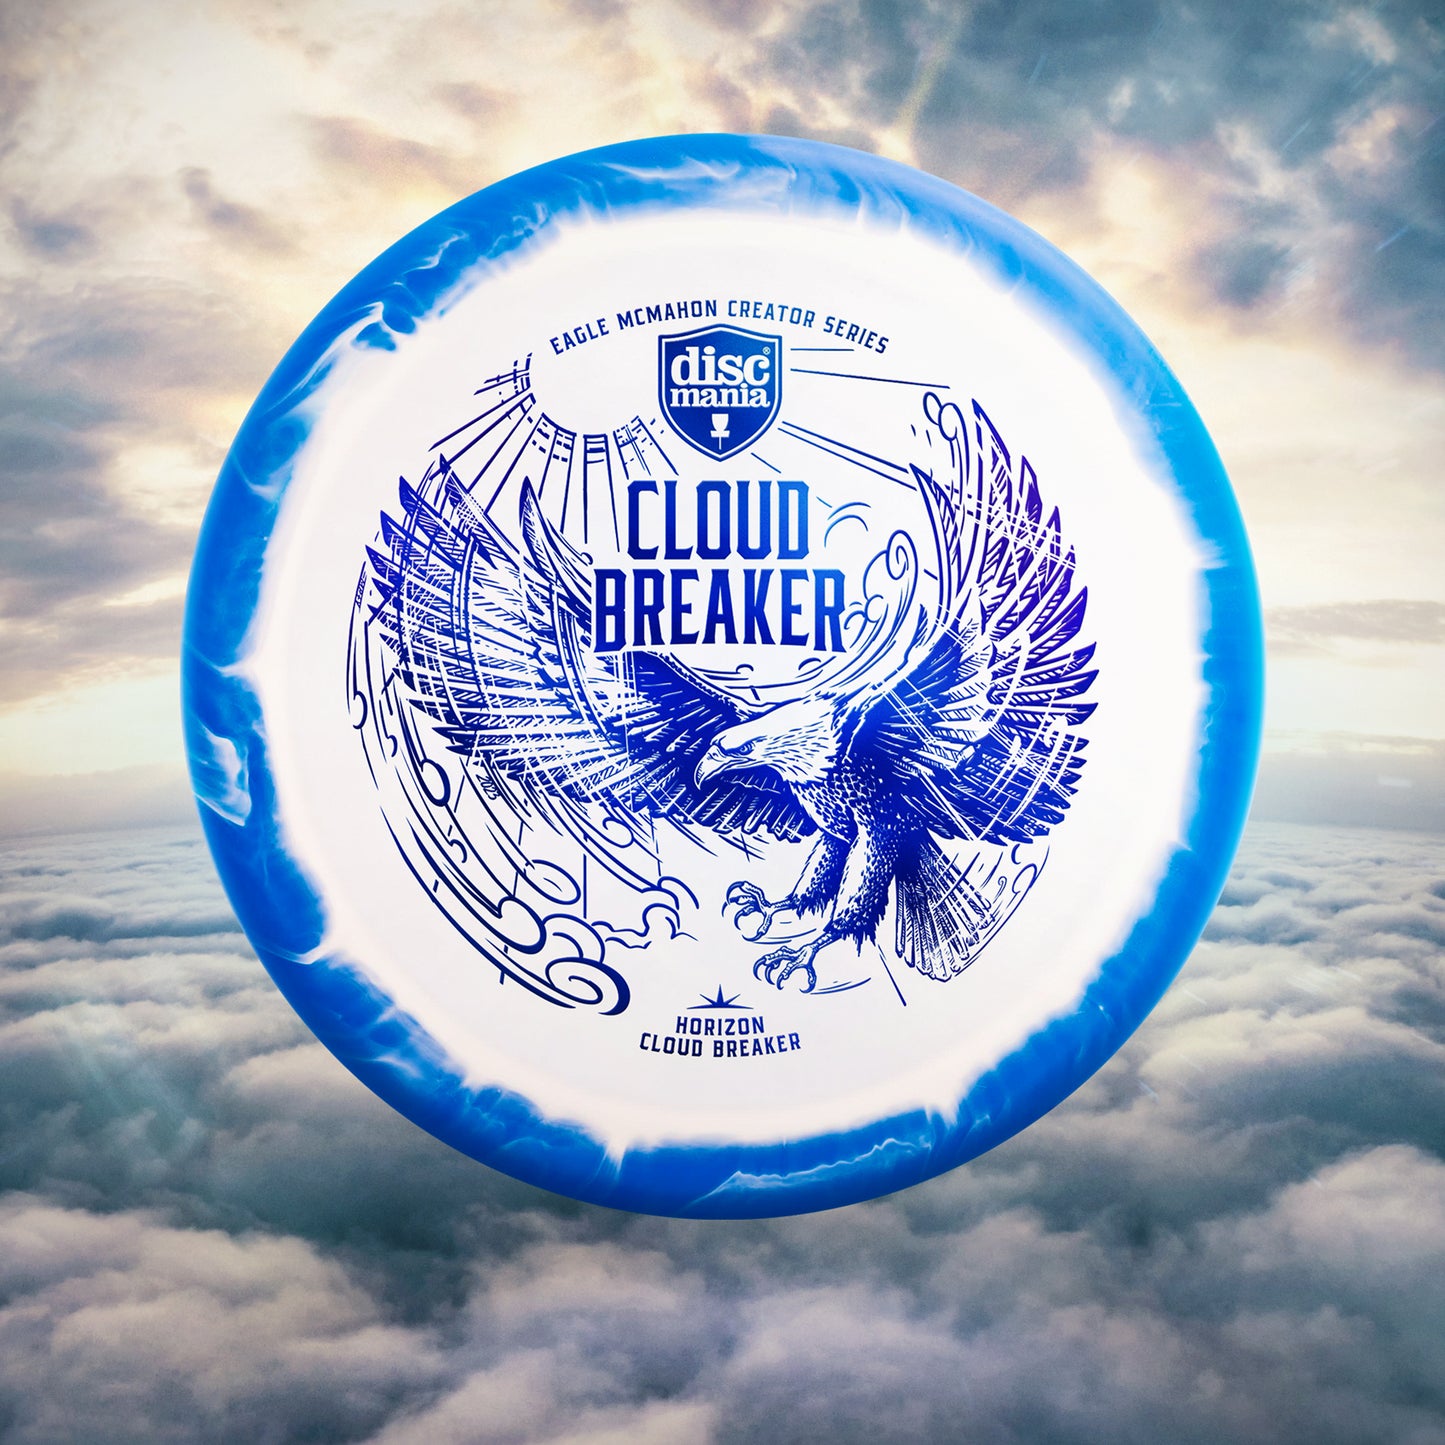 Discmania Cloud Breaker - Eagle McMahon Creator Series